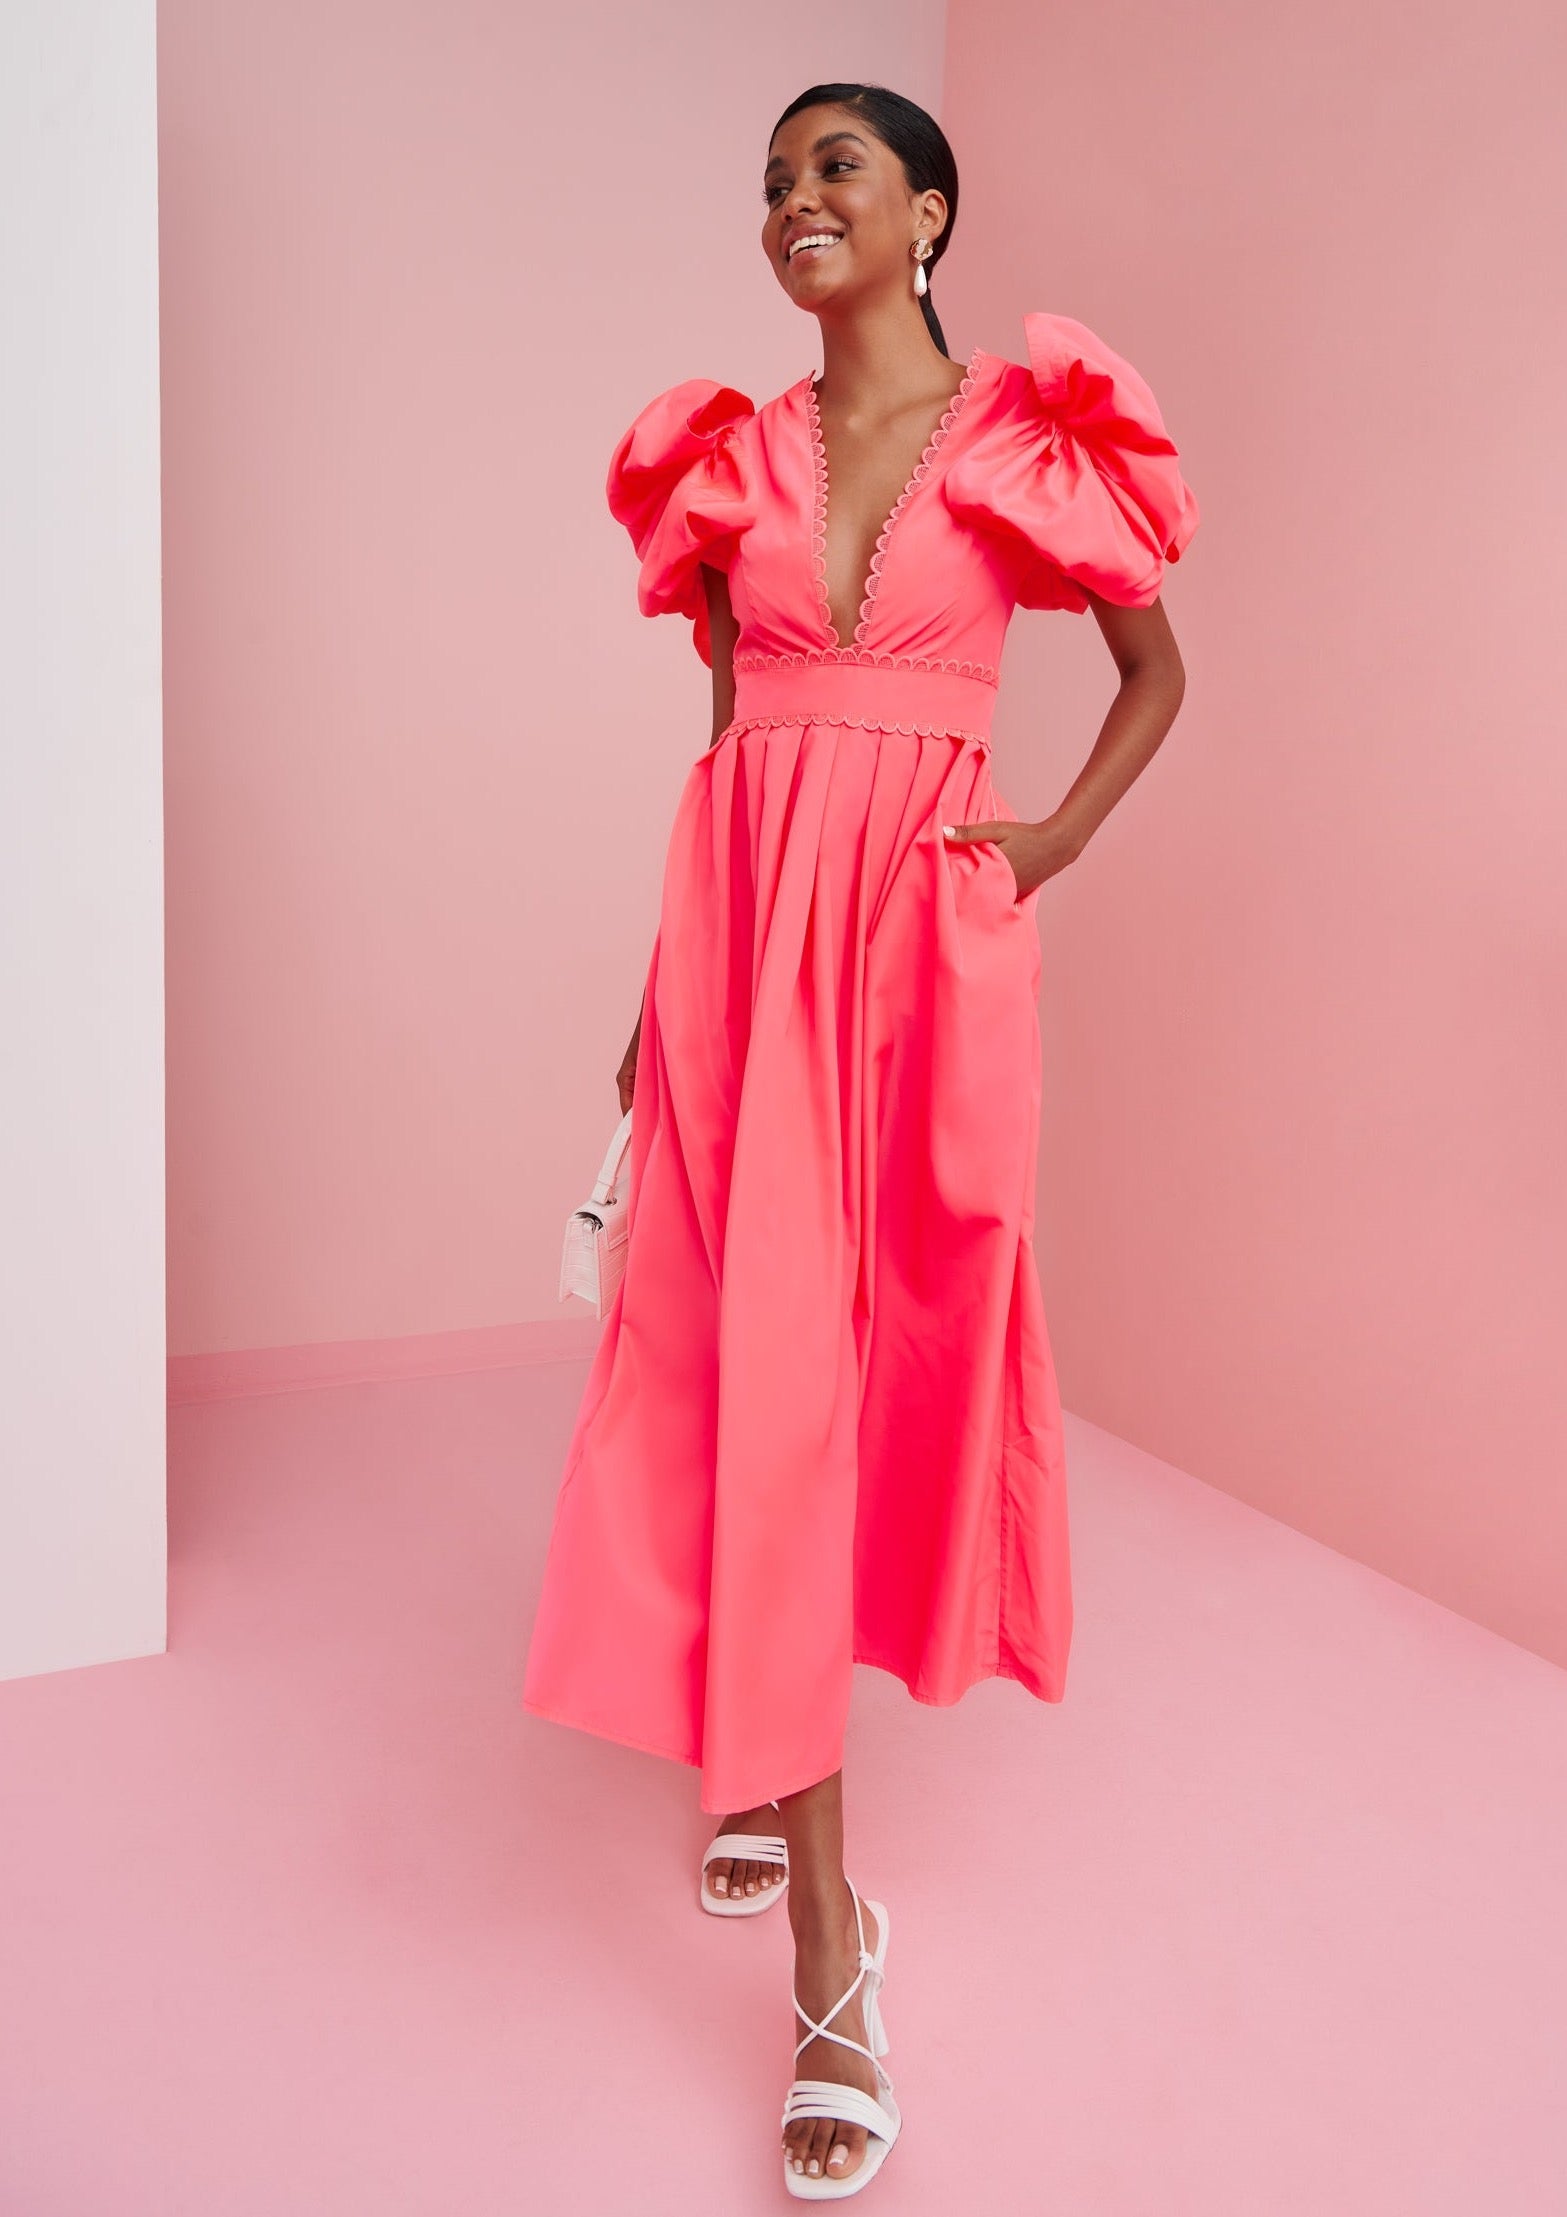 Celia B-Curazao Dress Neon Pink-Justbrazil